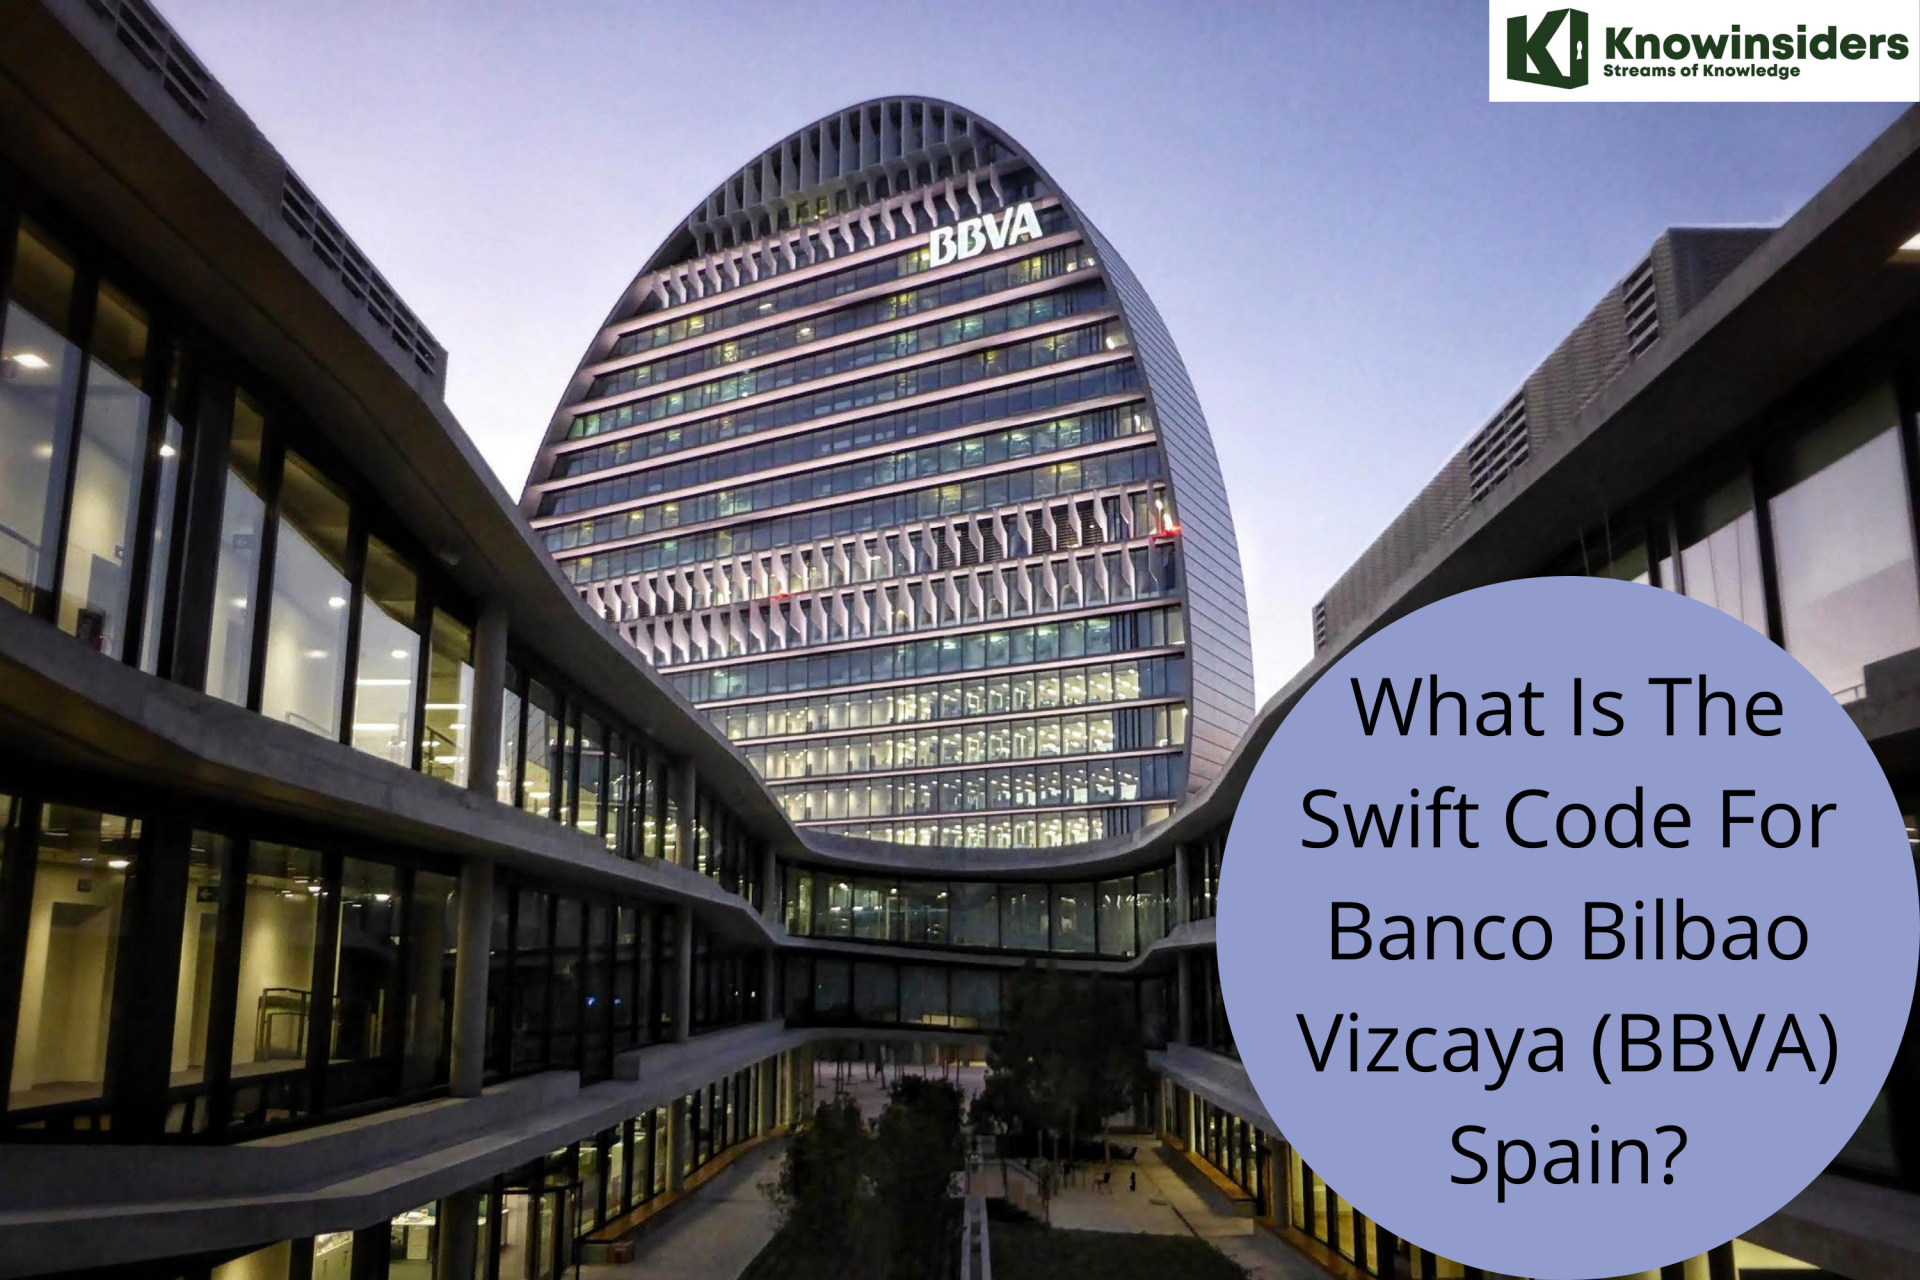 What Is The Swift Code For Banco Bilbao Vizcaya (BBVA) in Spain?